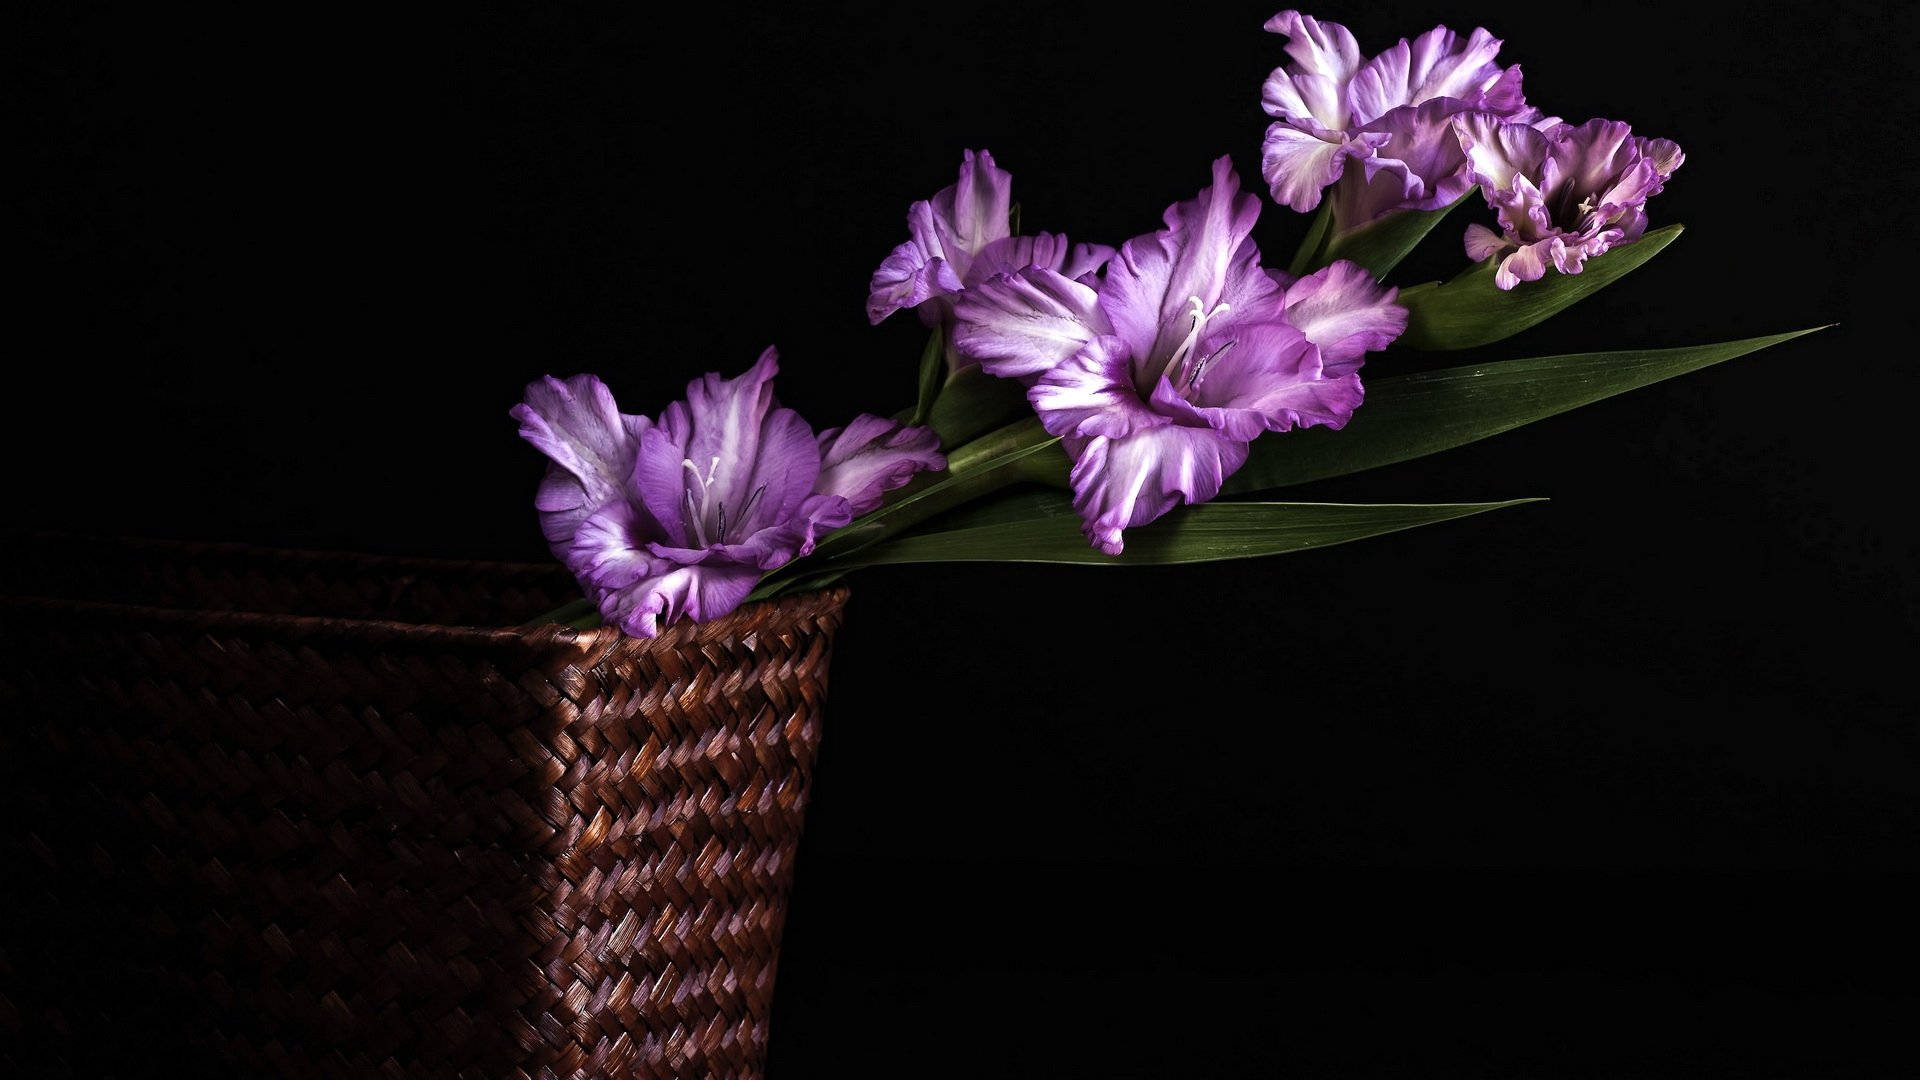 Stunning Gladiolus Flowers in Vibrant Purple hues Wallpaper